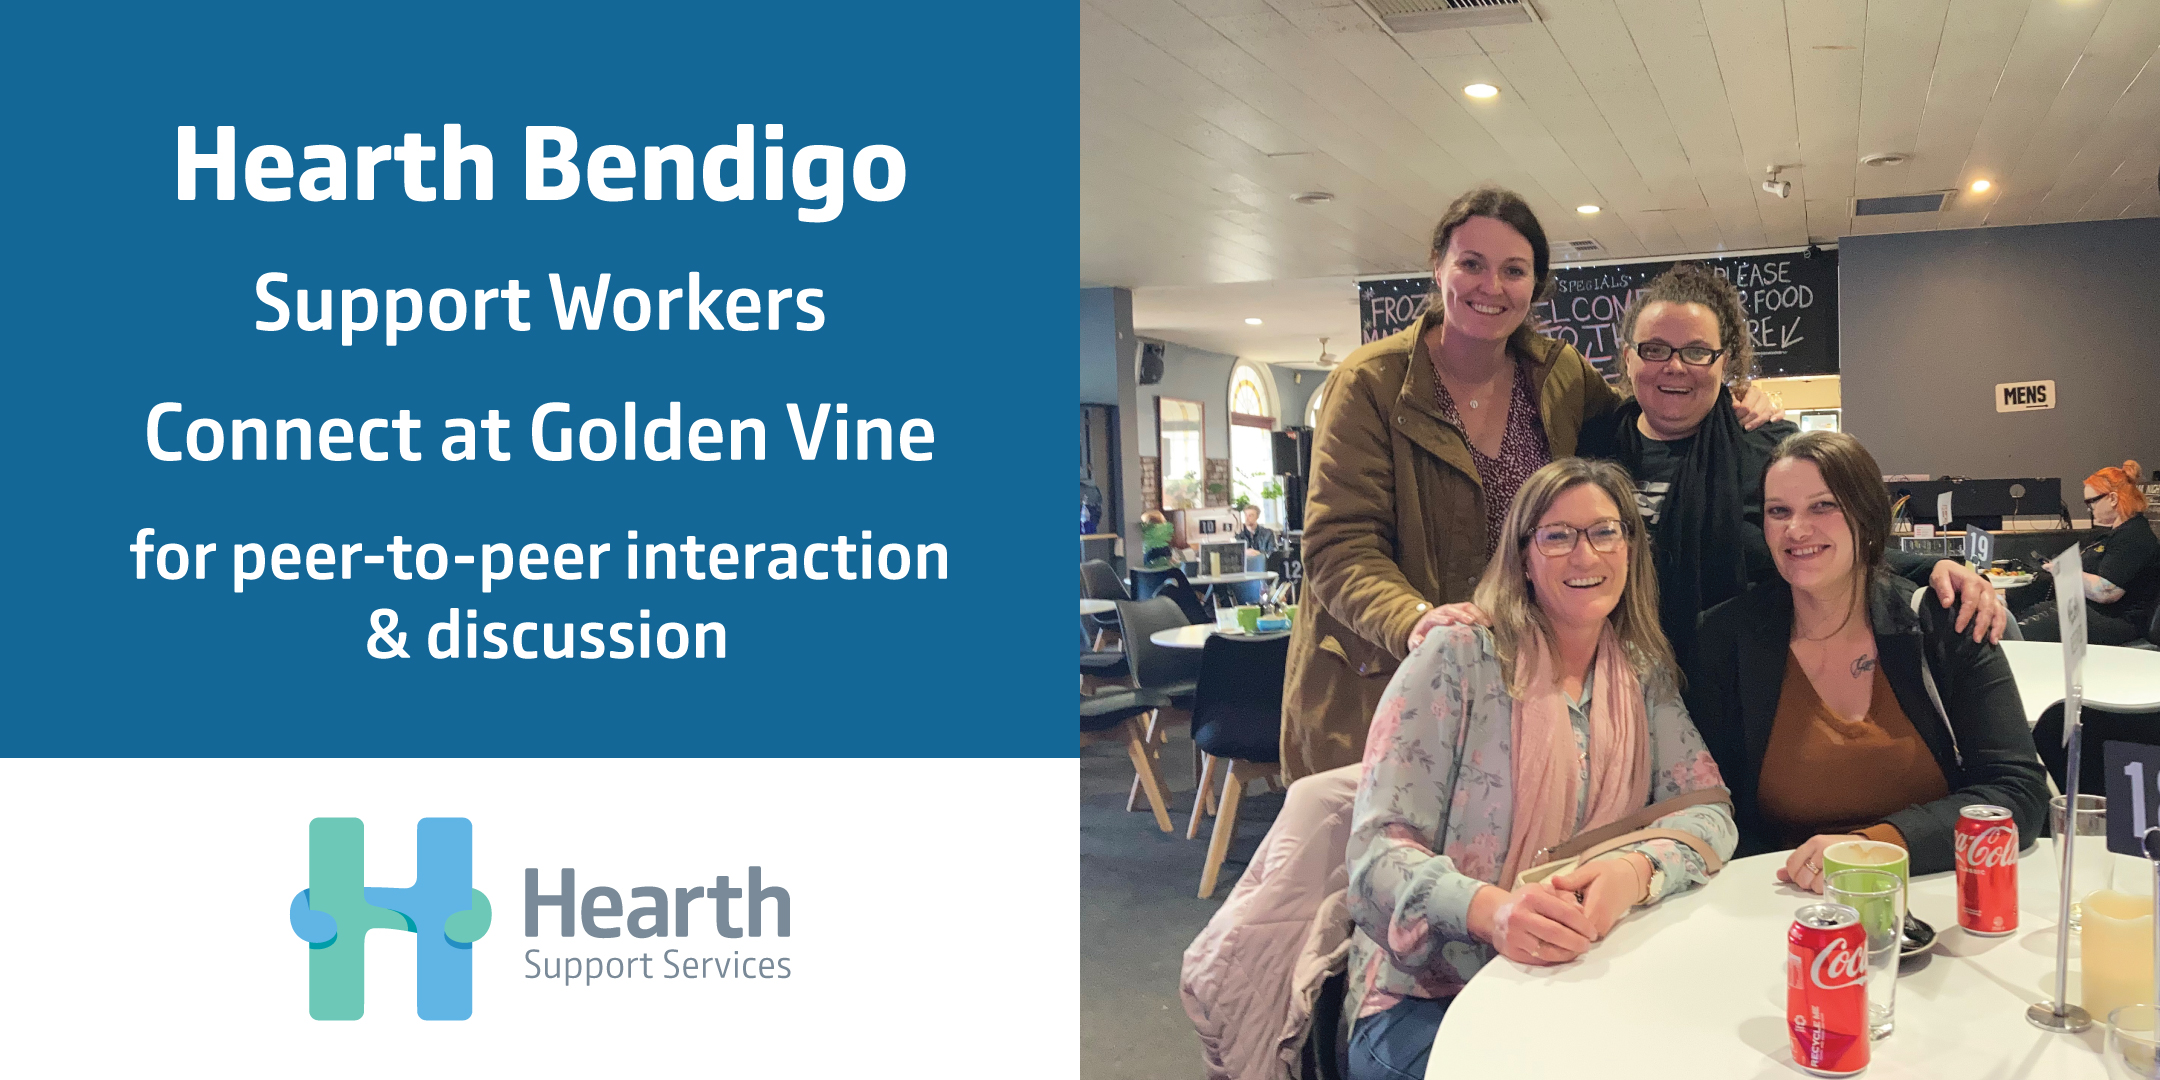 Hearth Bendigo Connect at Golden Vine